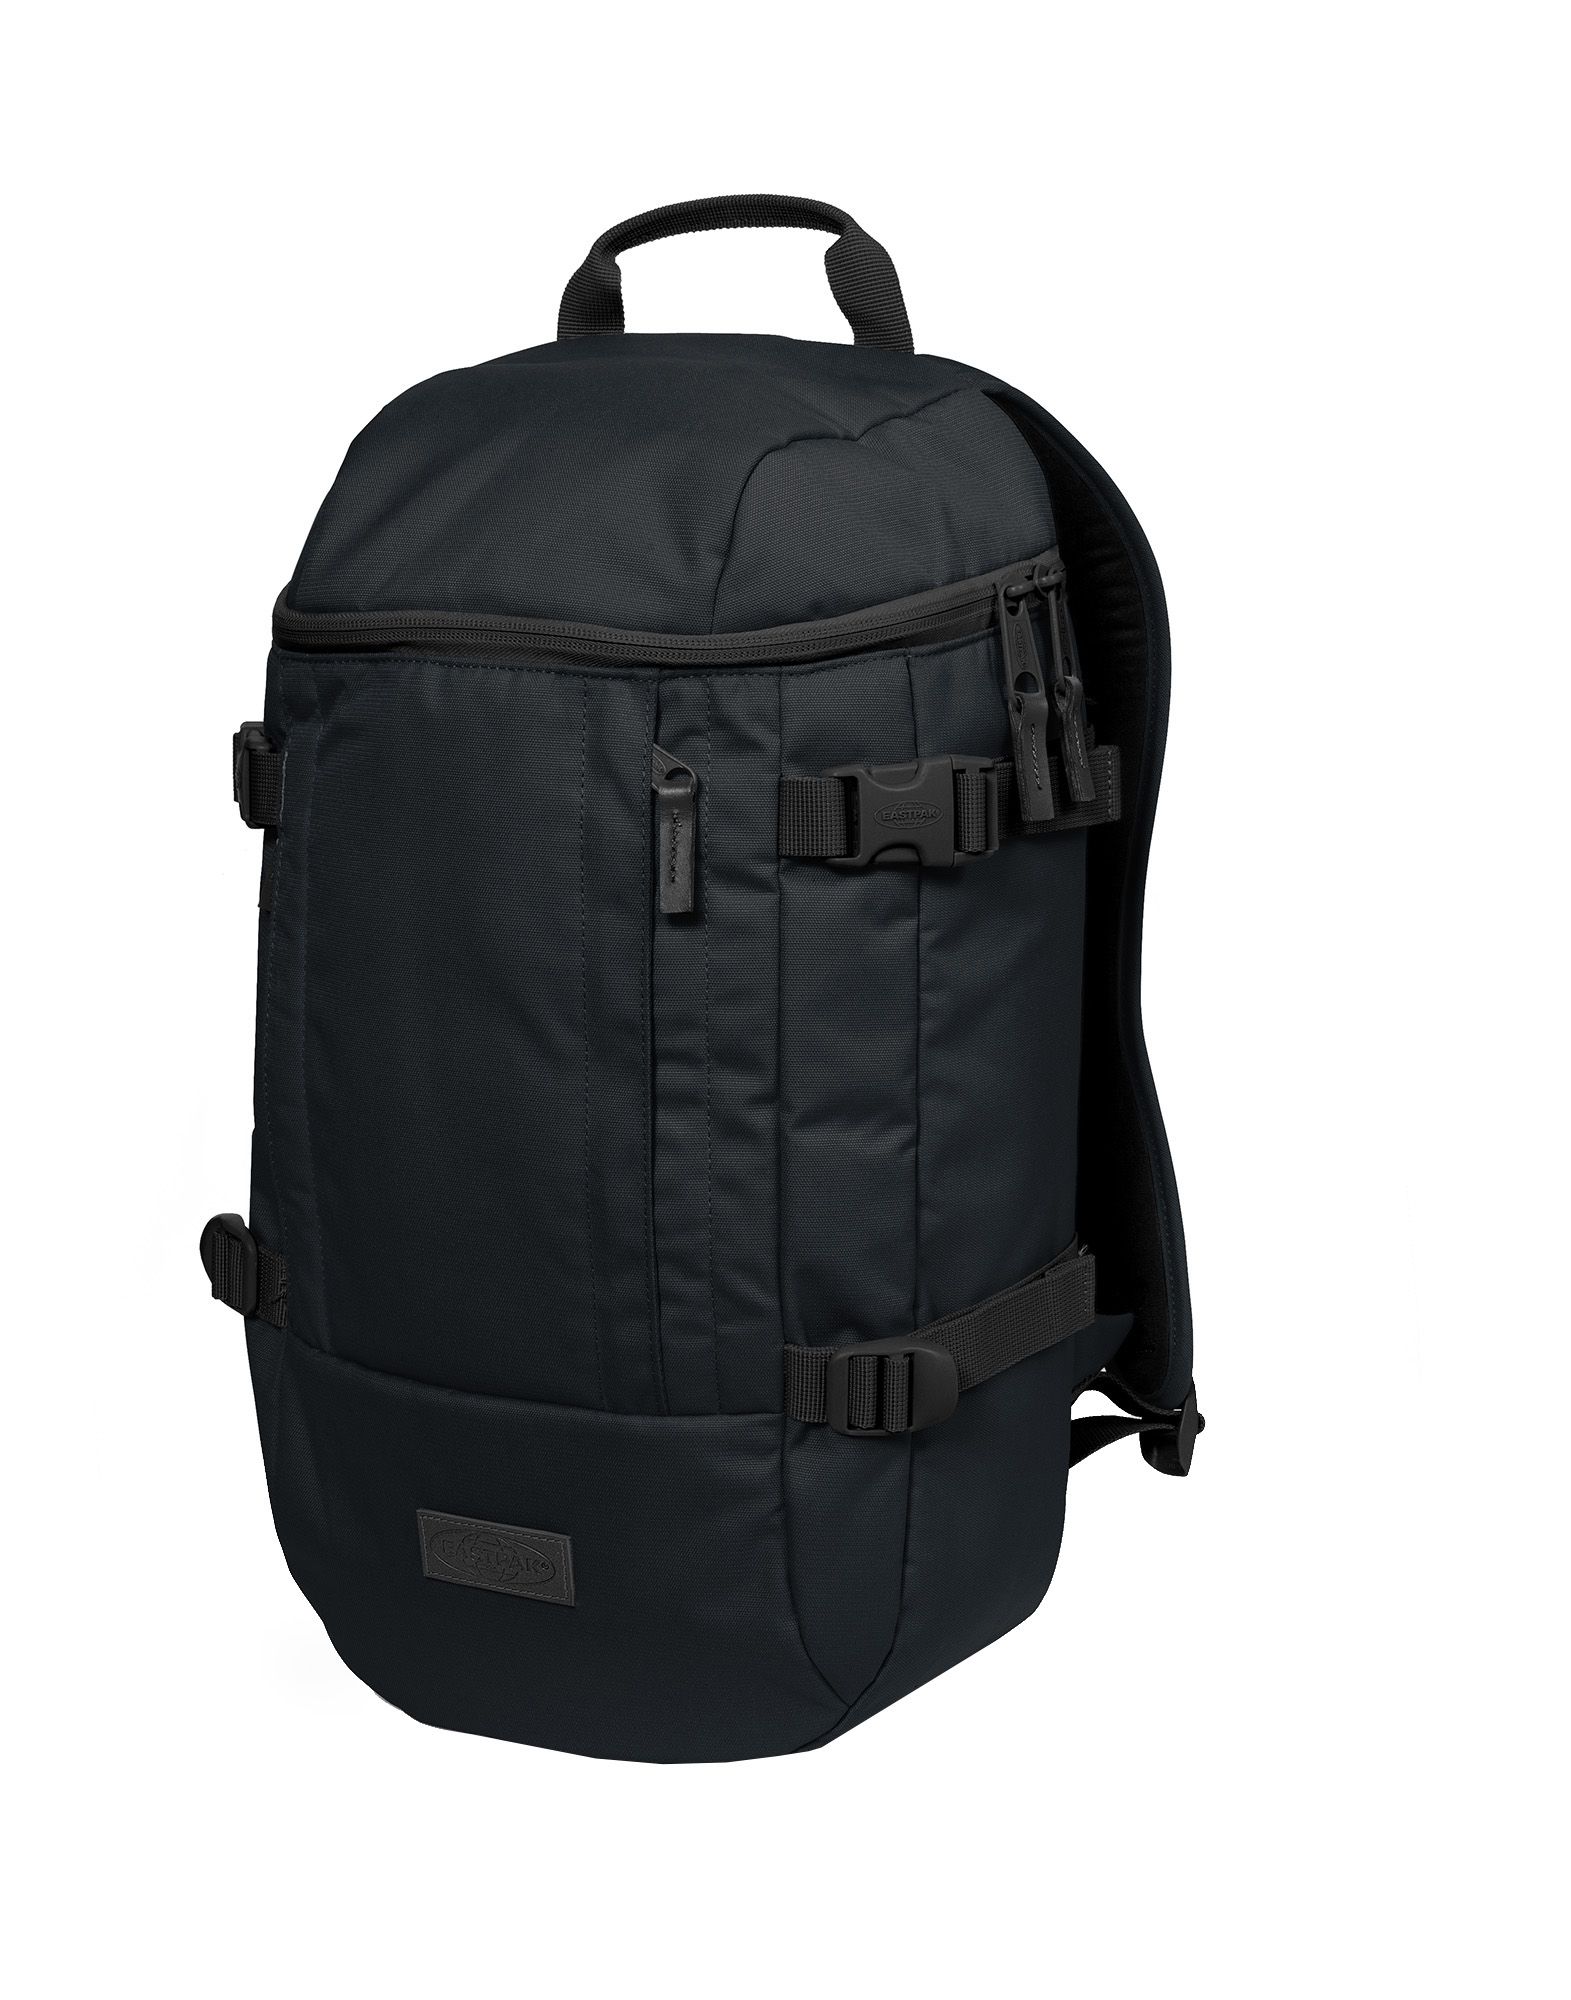 EASTPAK Backpack & fanny pack,45417921SS 1